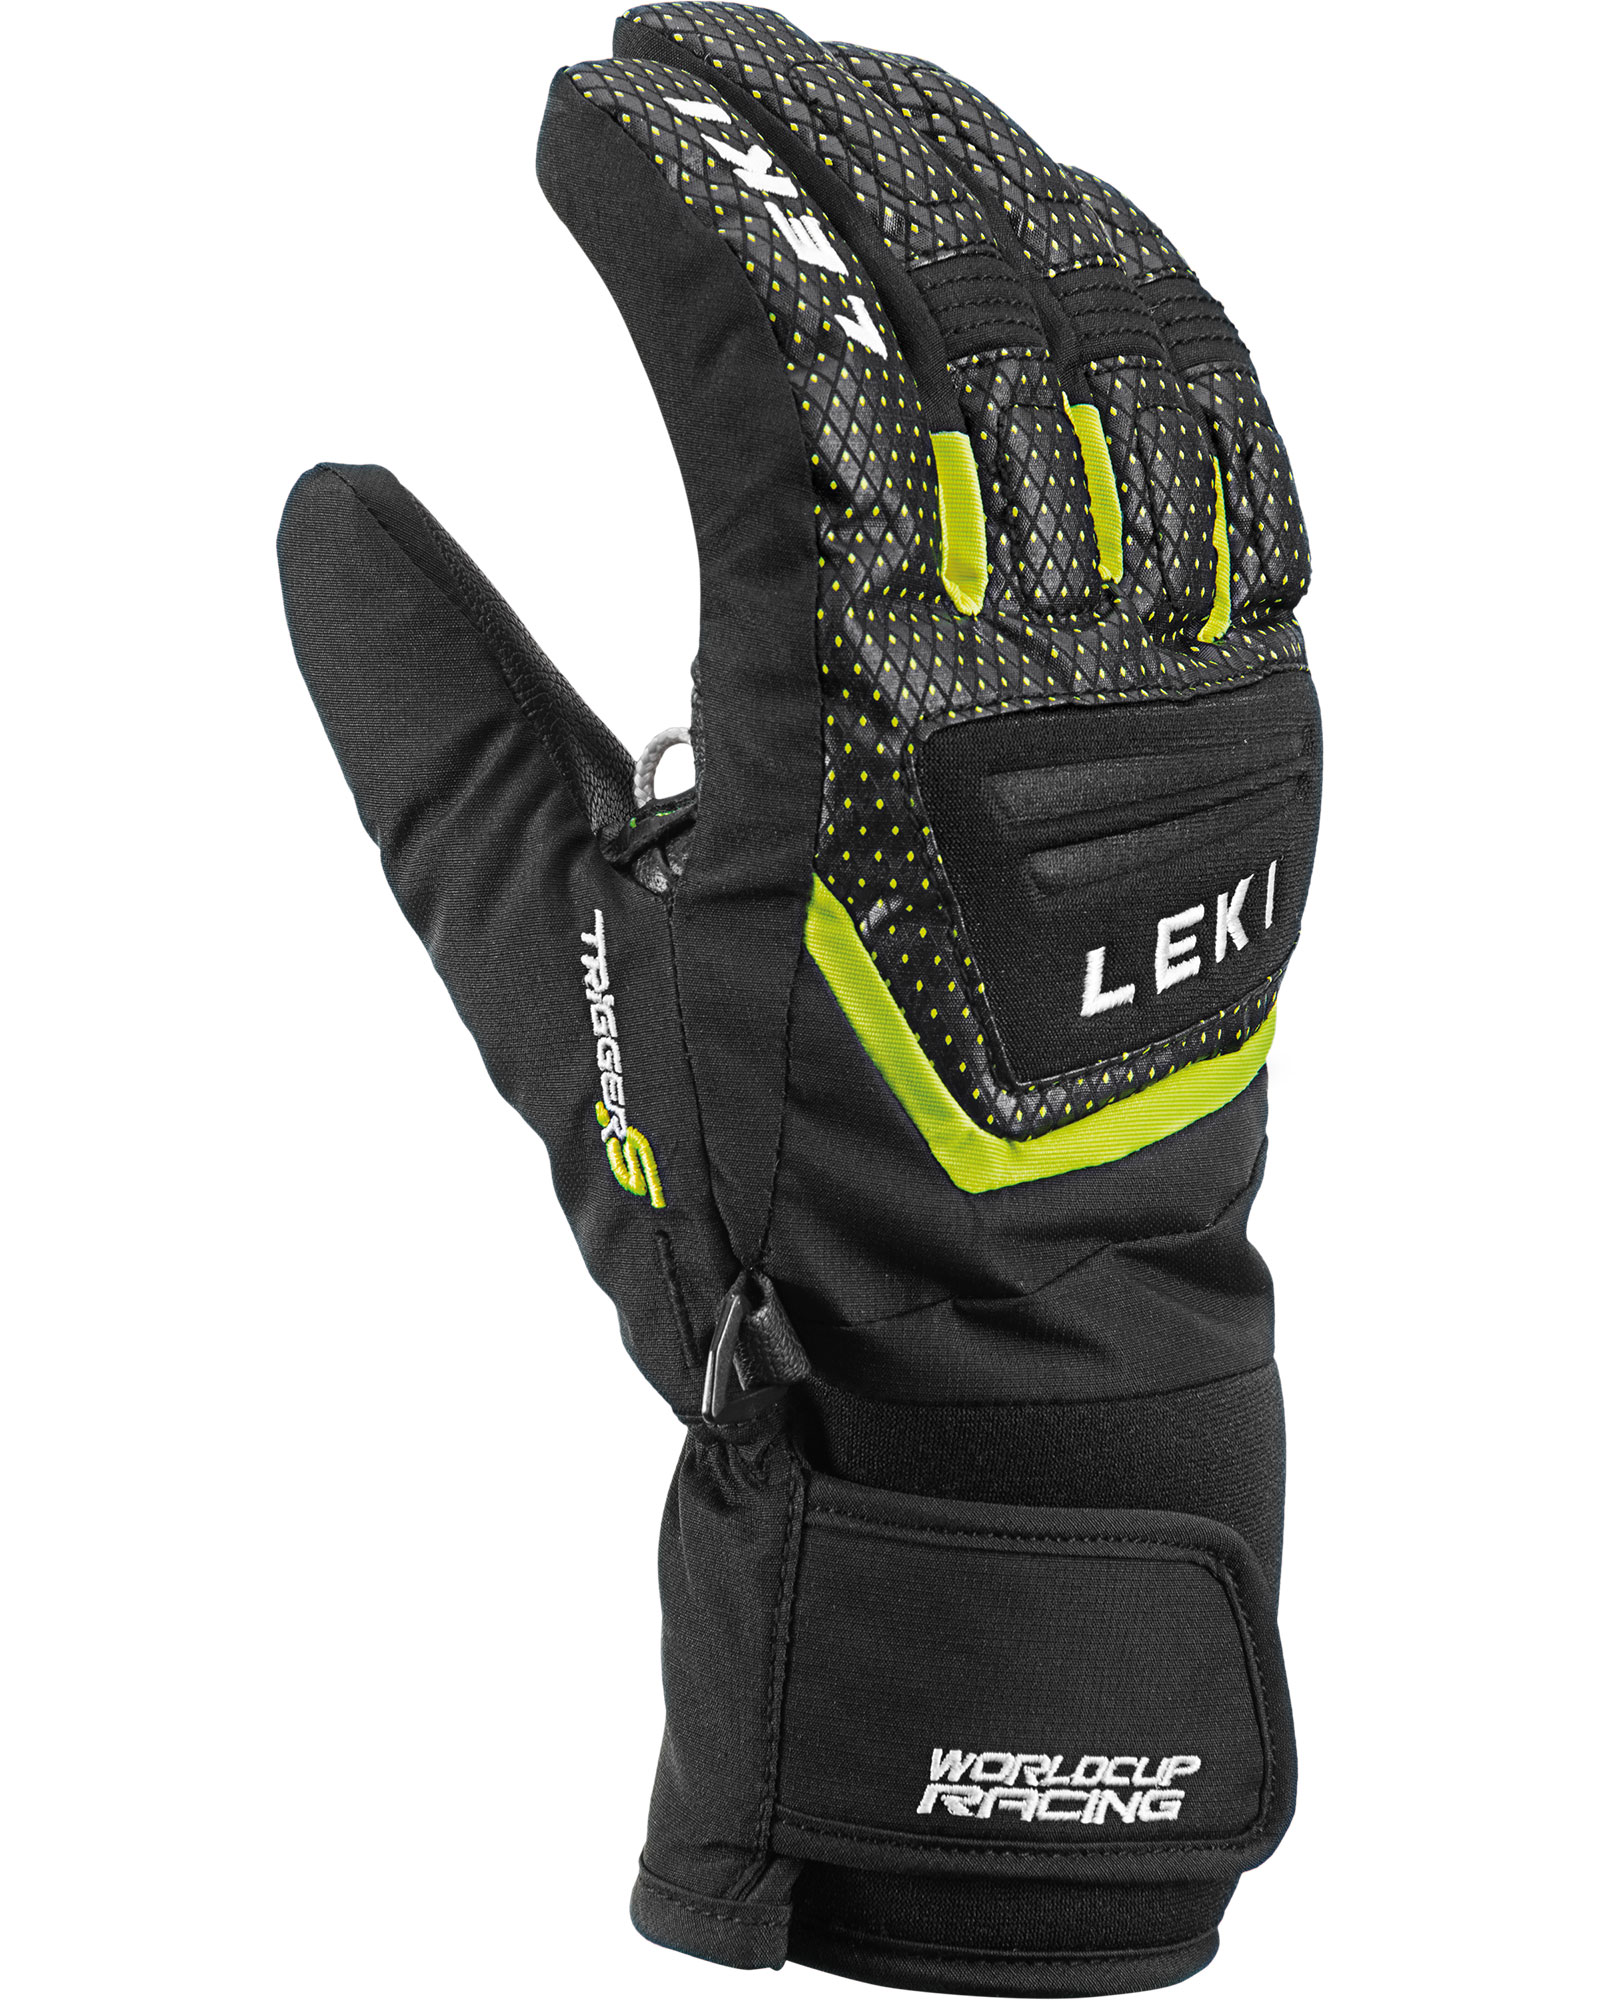 Leki Youth World Cup S Junior Gloves - Black/Ice Lemon UK 4 INF